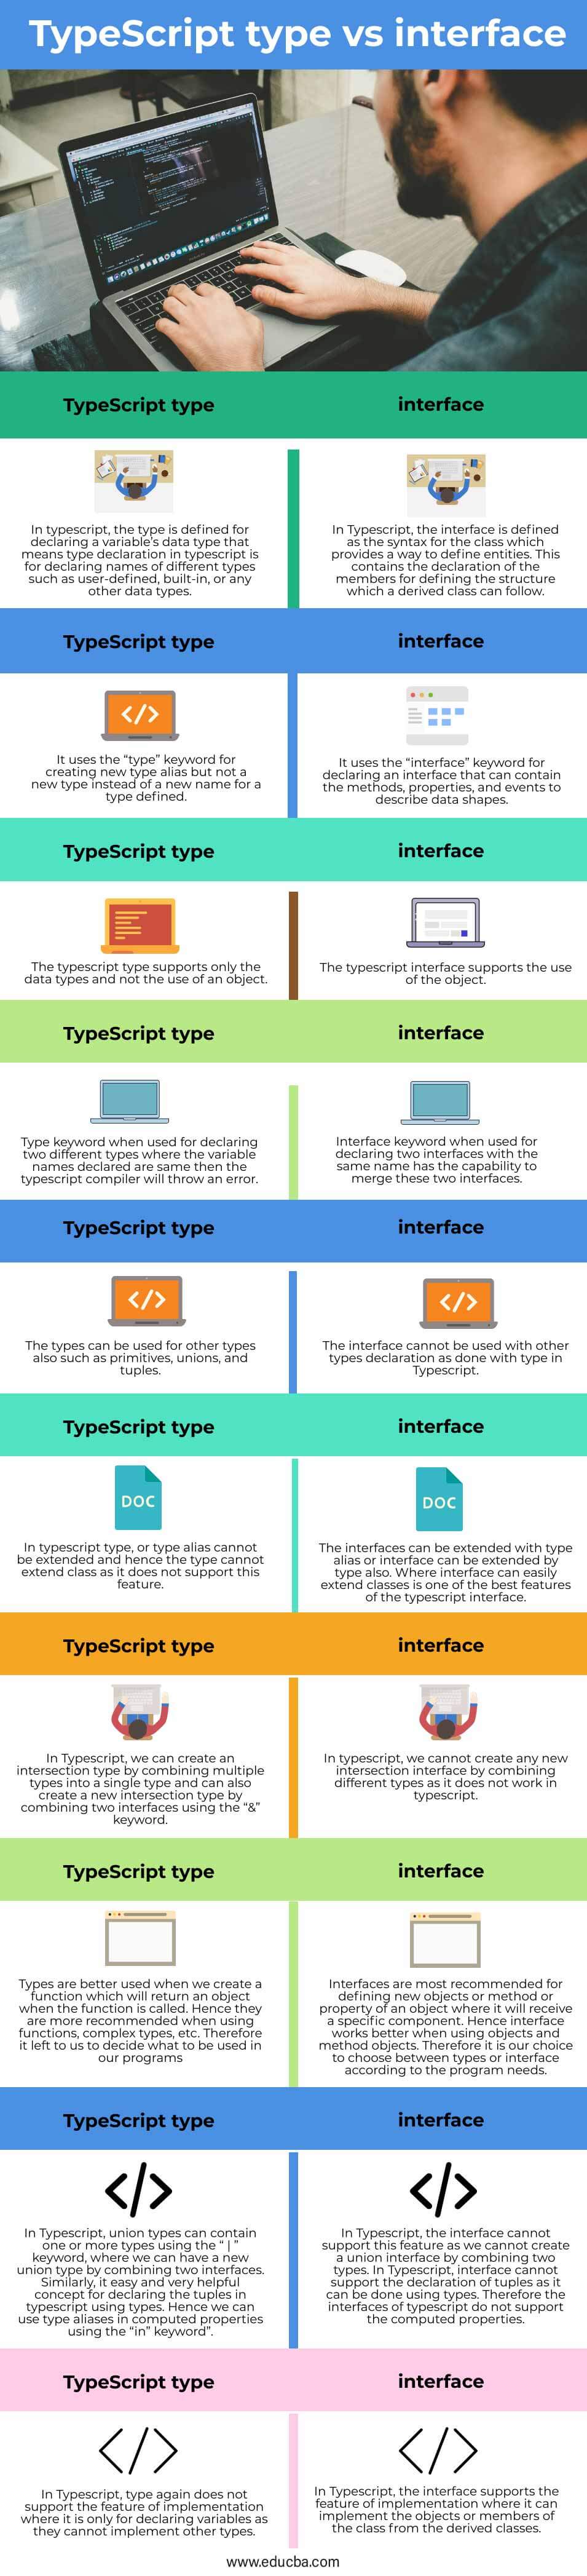 TypeScript-type-vs-interface-info